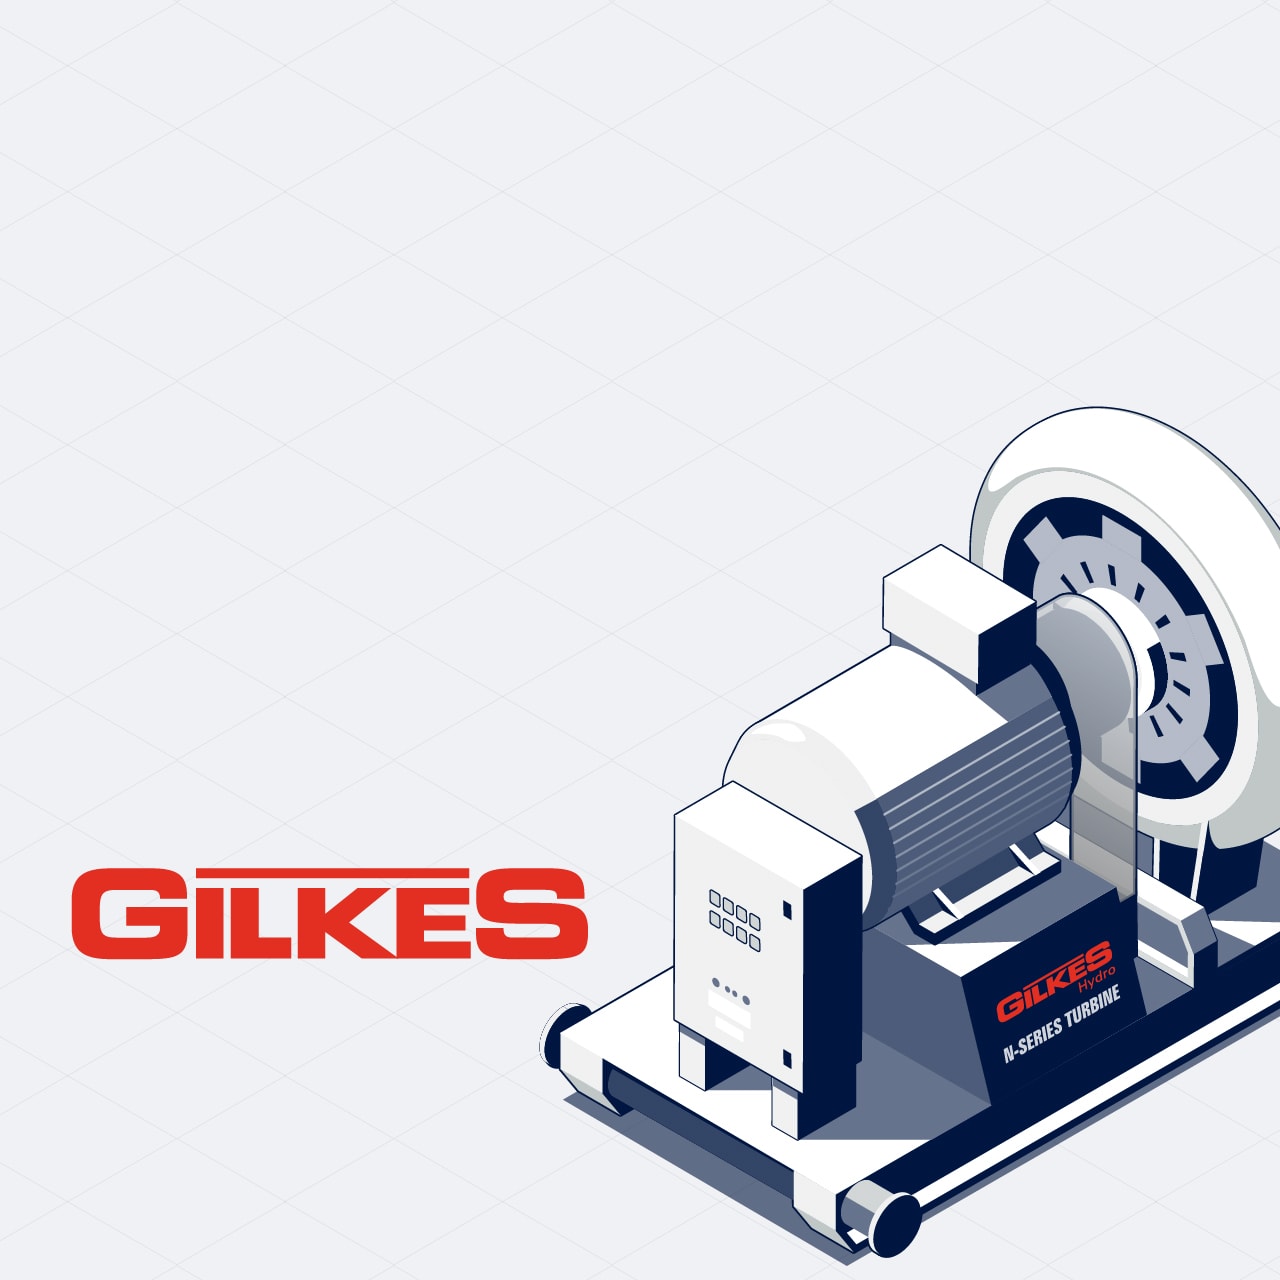 GILKES animation image showing logo and a turbine